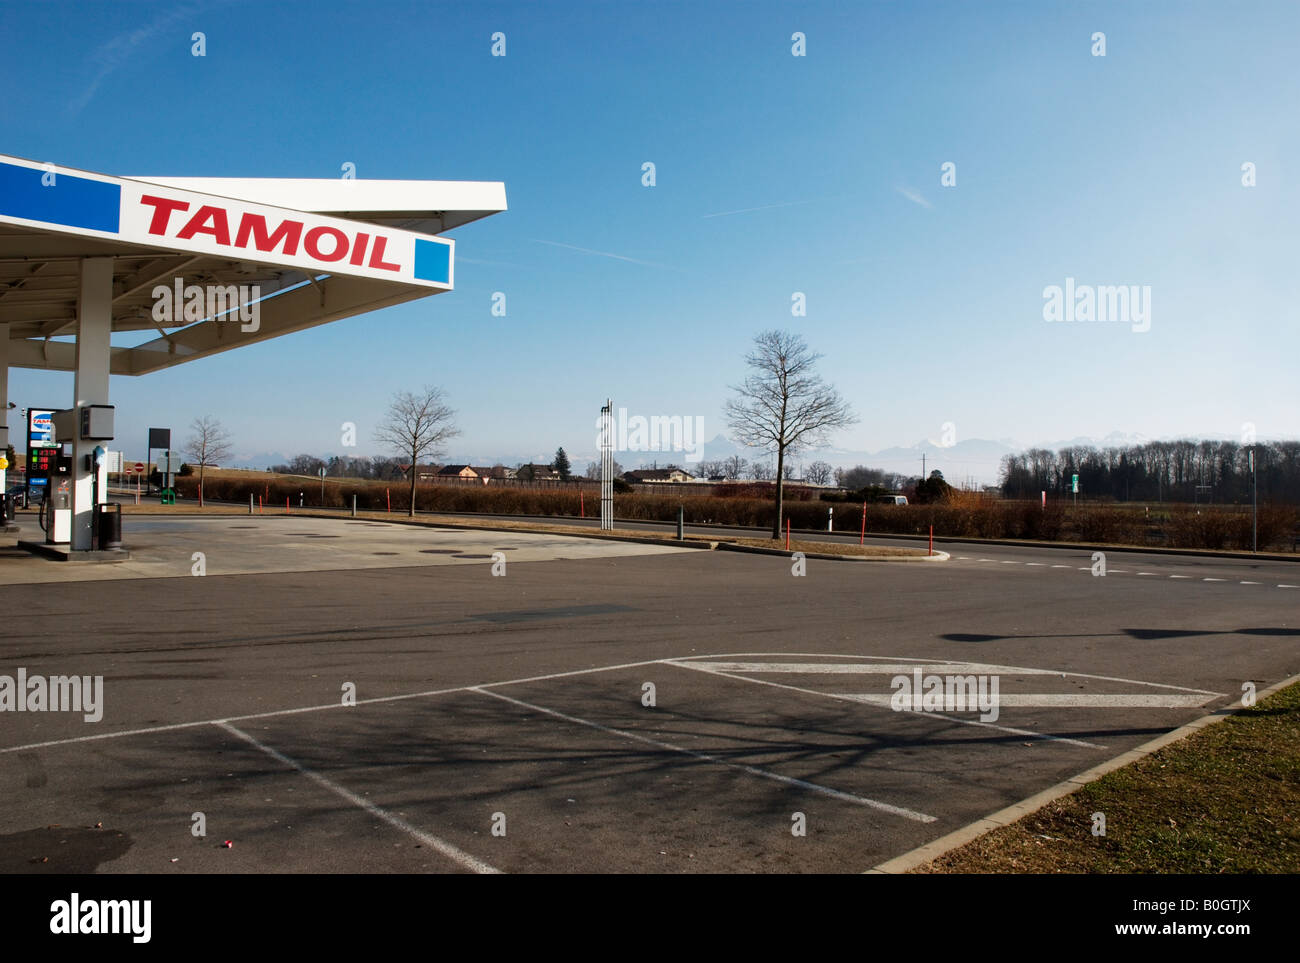 Tamoil petrol station in Switzerland Stock Photo